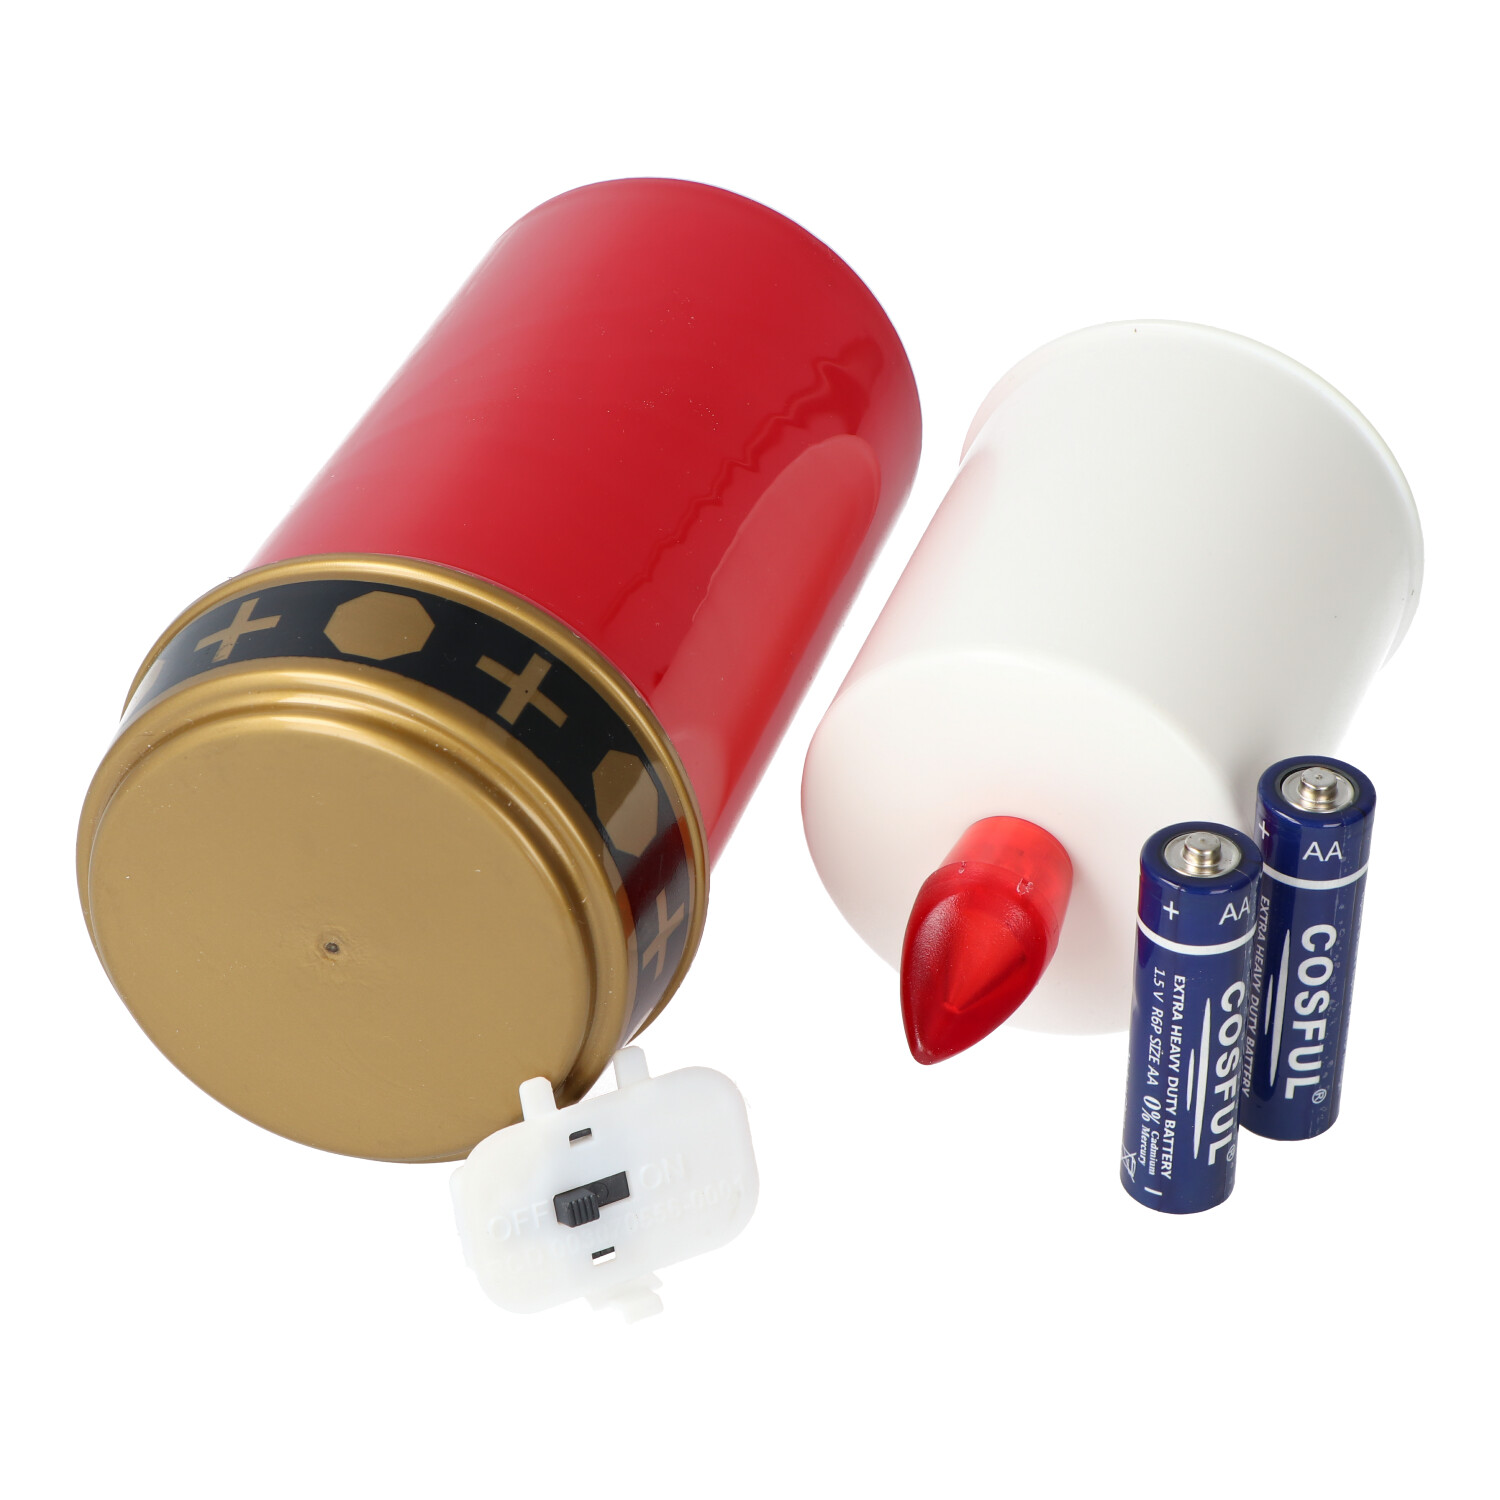 LED-Grablicht rot mit Kerzenschein, 13,2x7,3cm, inklusive 2x AA Mignon LR6 Standard Batterien